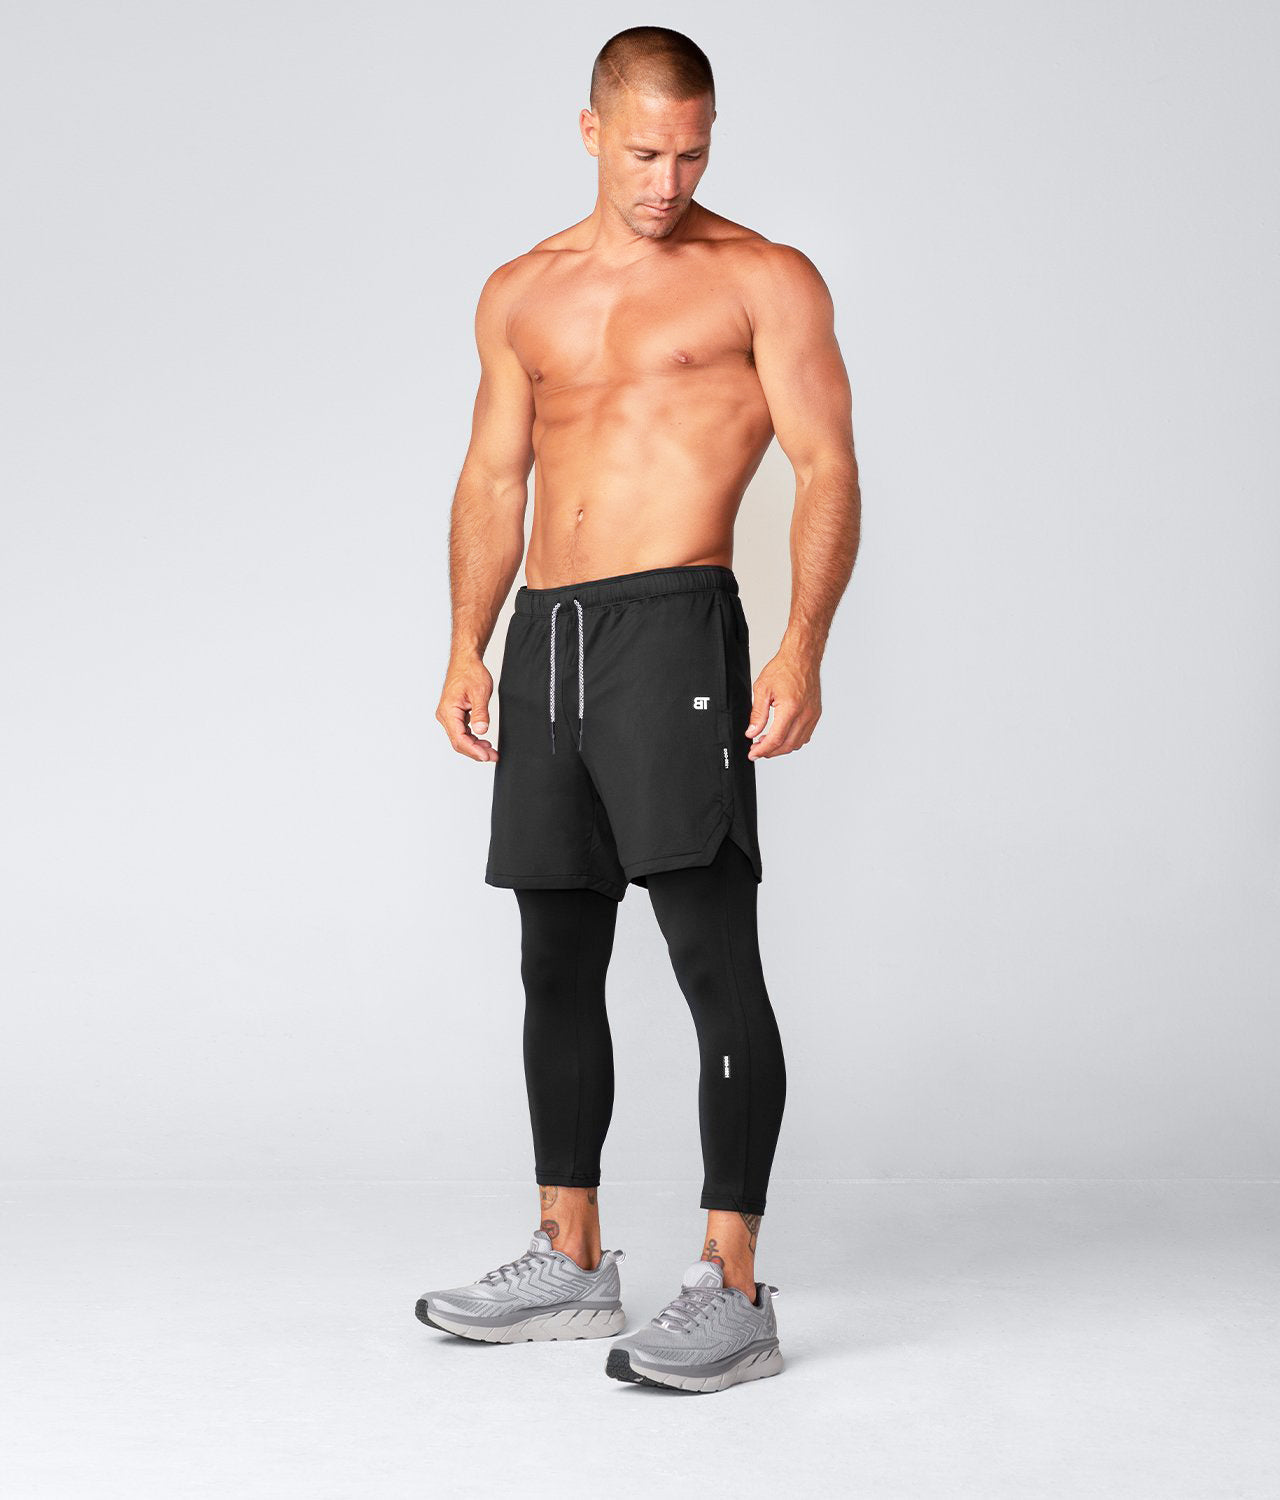 Black Men's Athletic & Workout Shorts